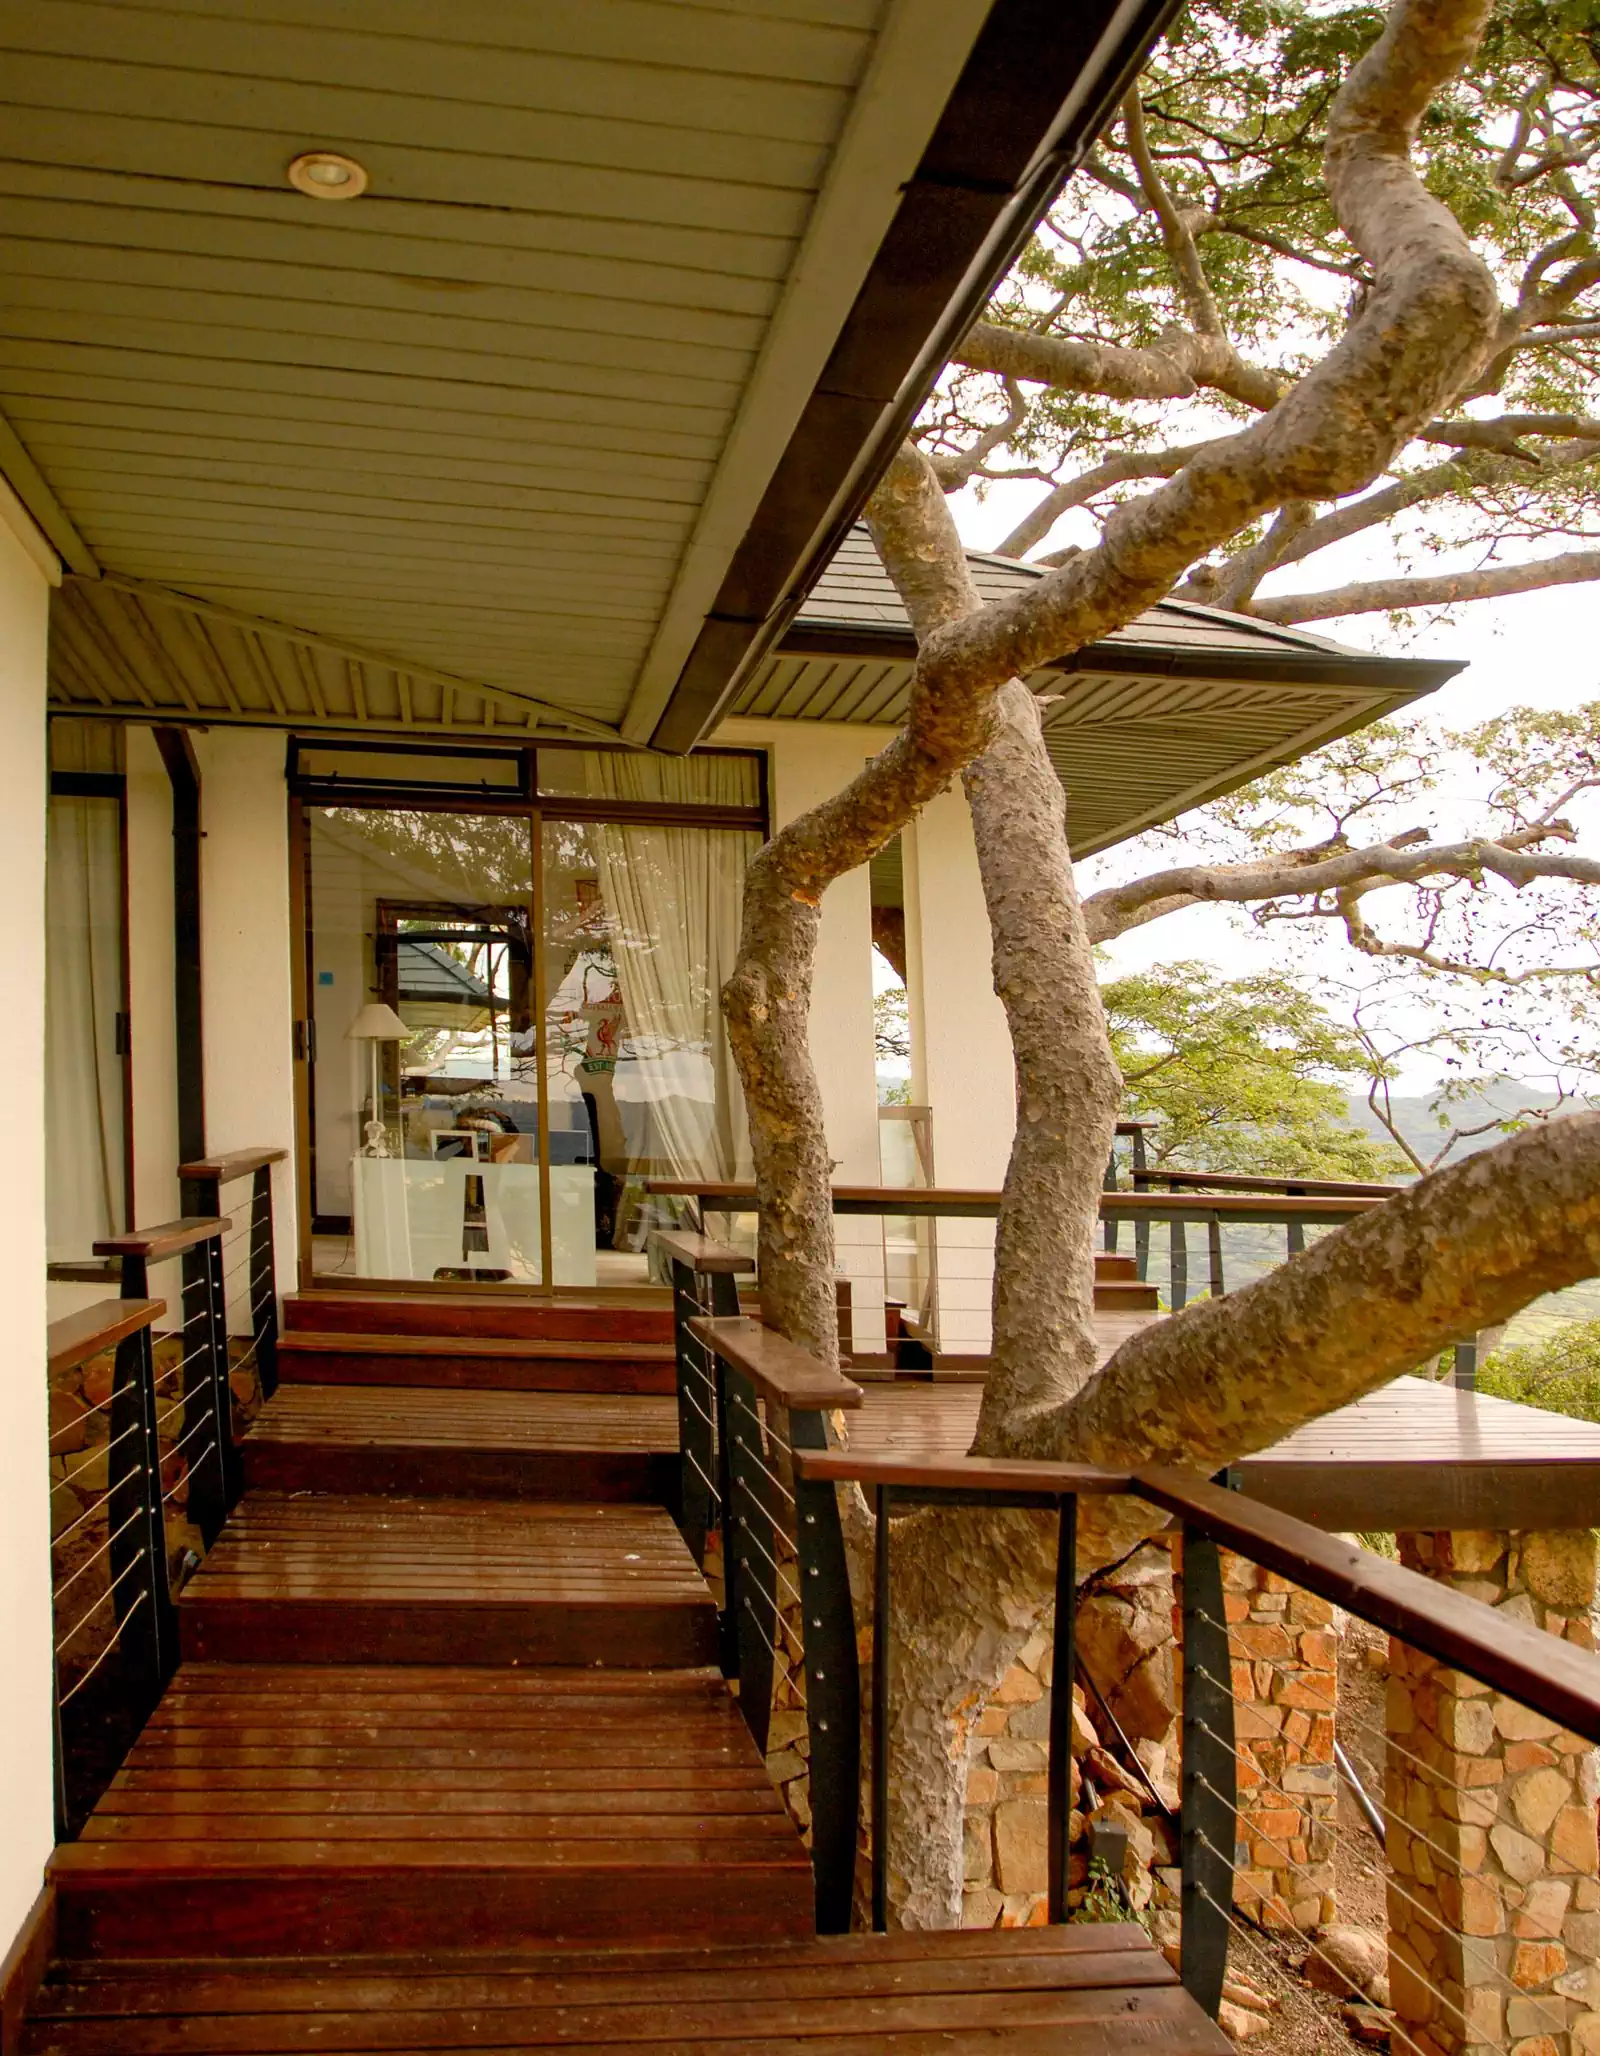 Walkways through branches architectural design of villa by Zimbabwean architect